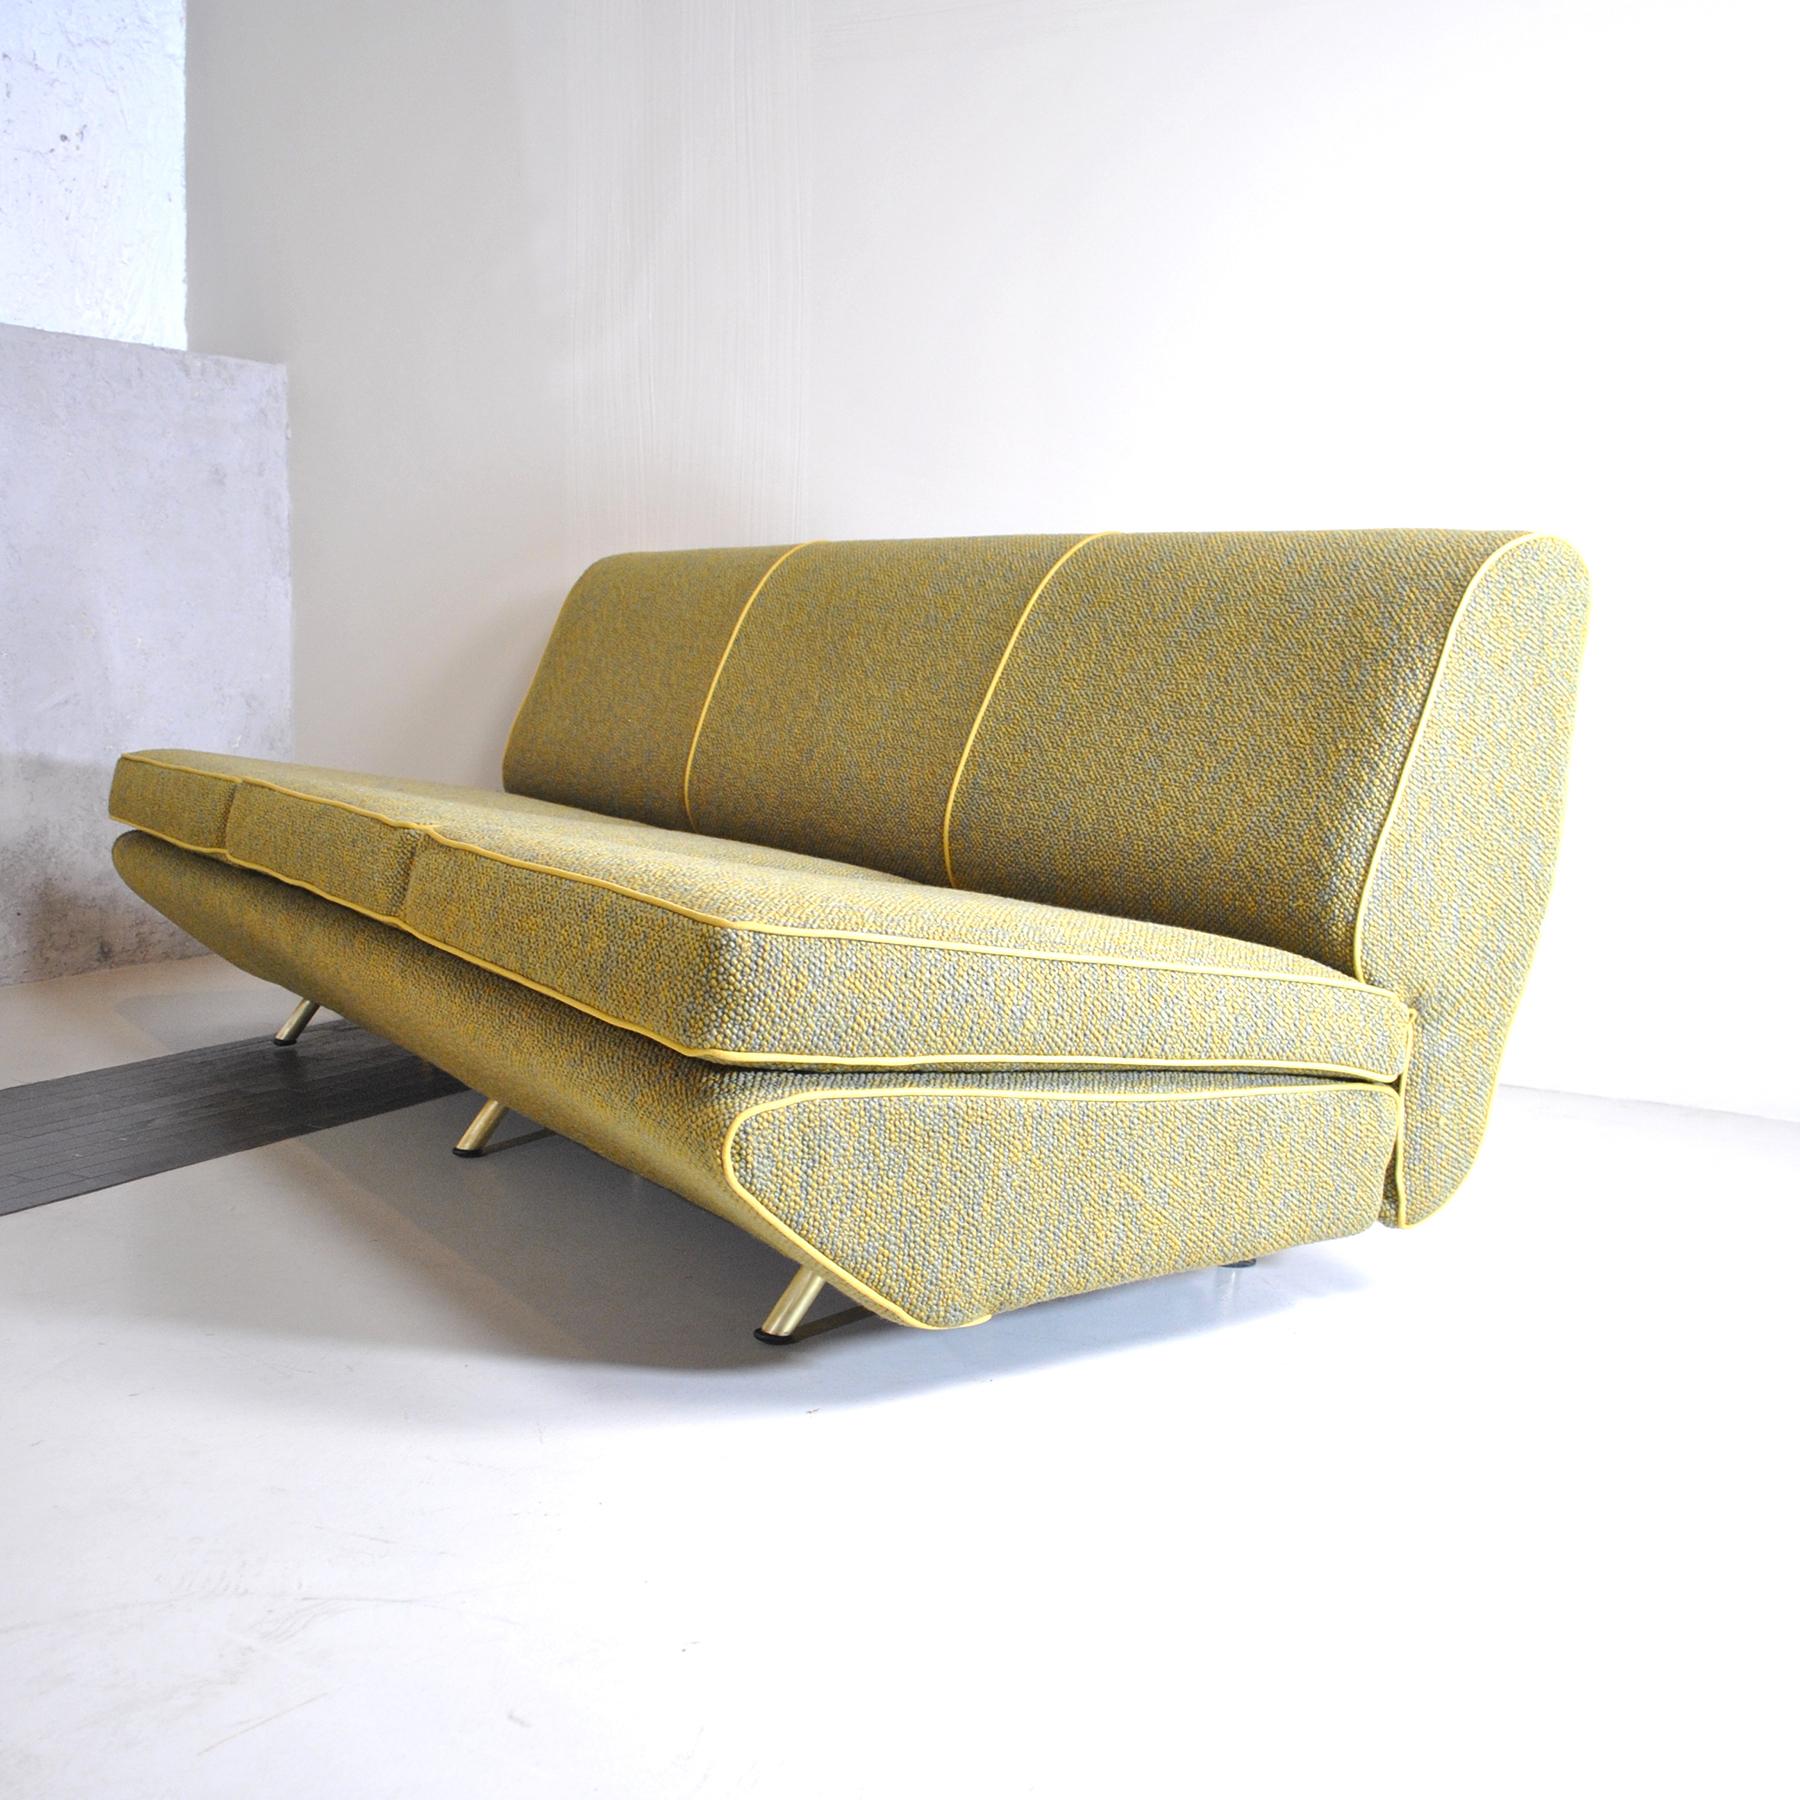 Metal Marco Zanuso Italian Midcentury Sofa model sleep o matic 